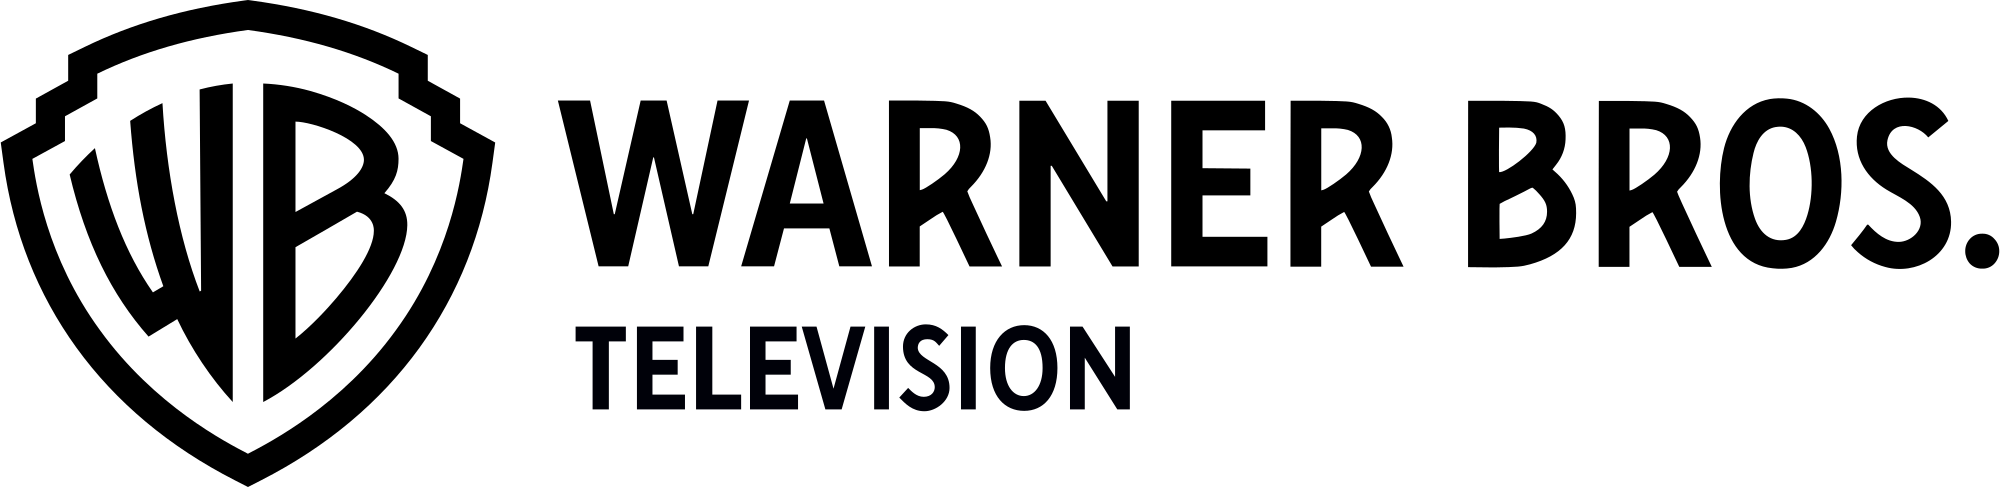 Warner Bros. Television Logo